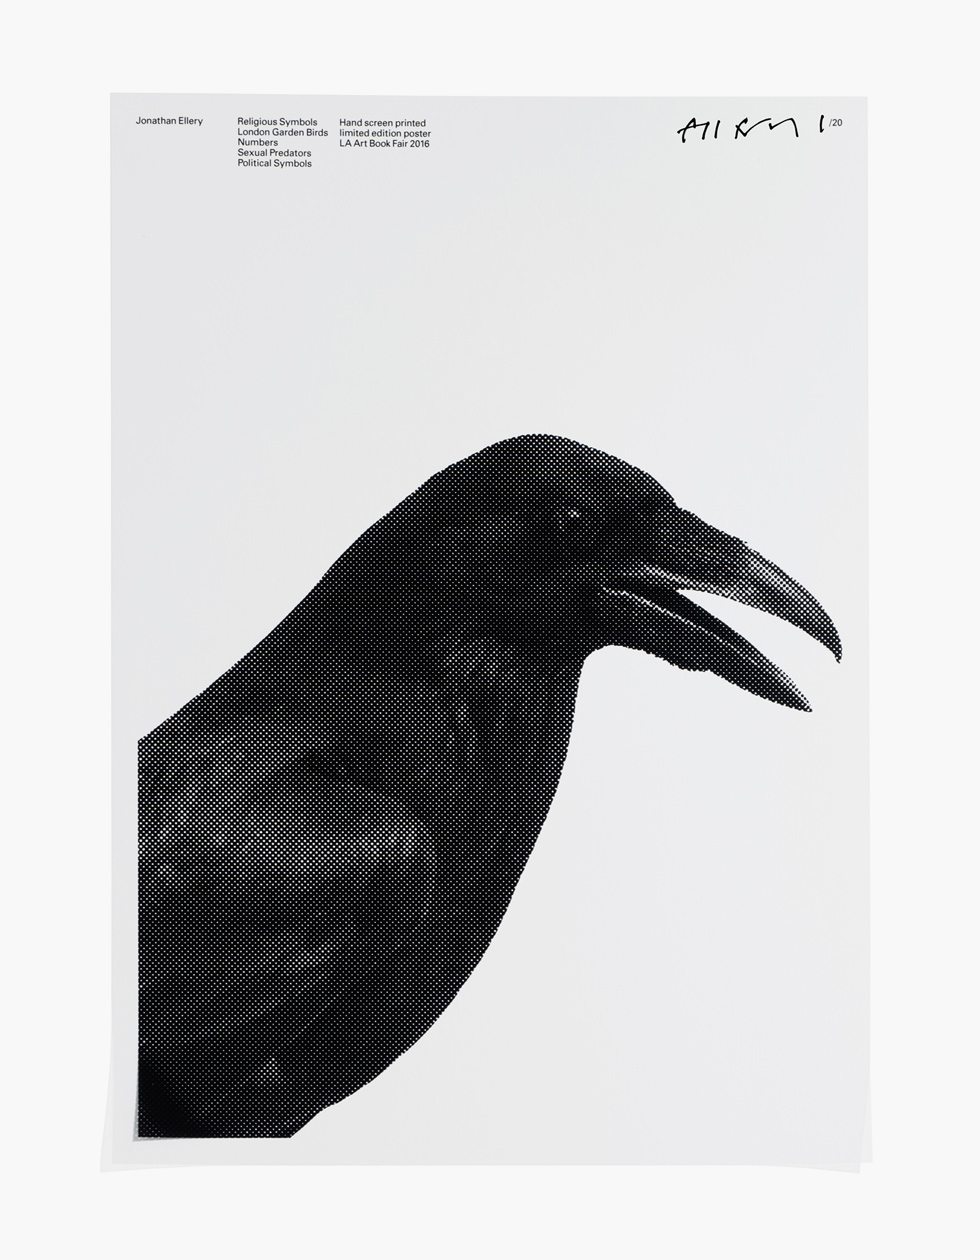 Jonathan Ellery, art, Religious Symbols/ London Garden Birds/ Numbers/ Sexual Predators/ Political Symbols